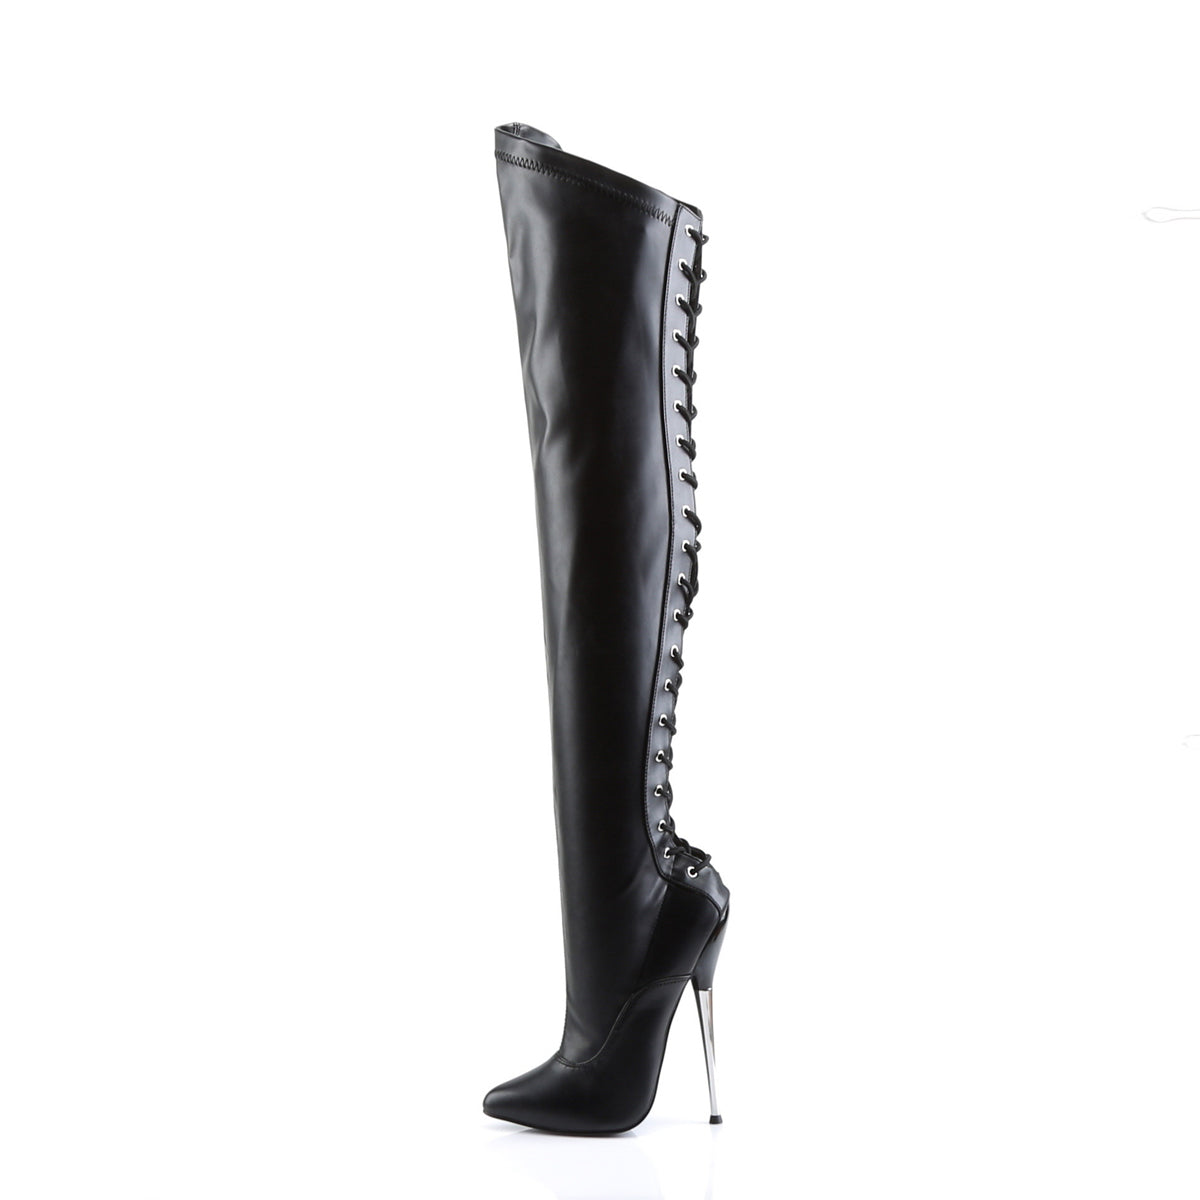 Devious Womens Boots. DAGGER-3060 BLK STRETCH PU